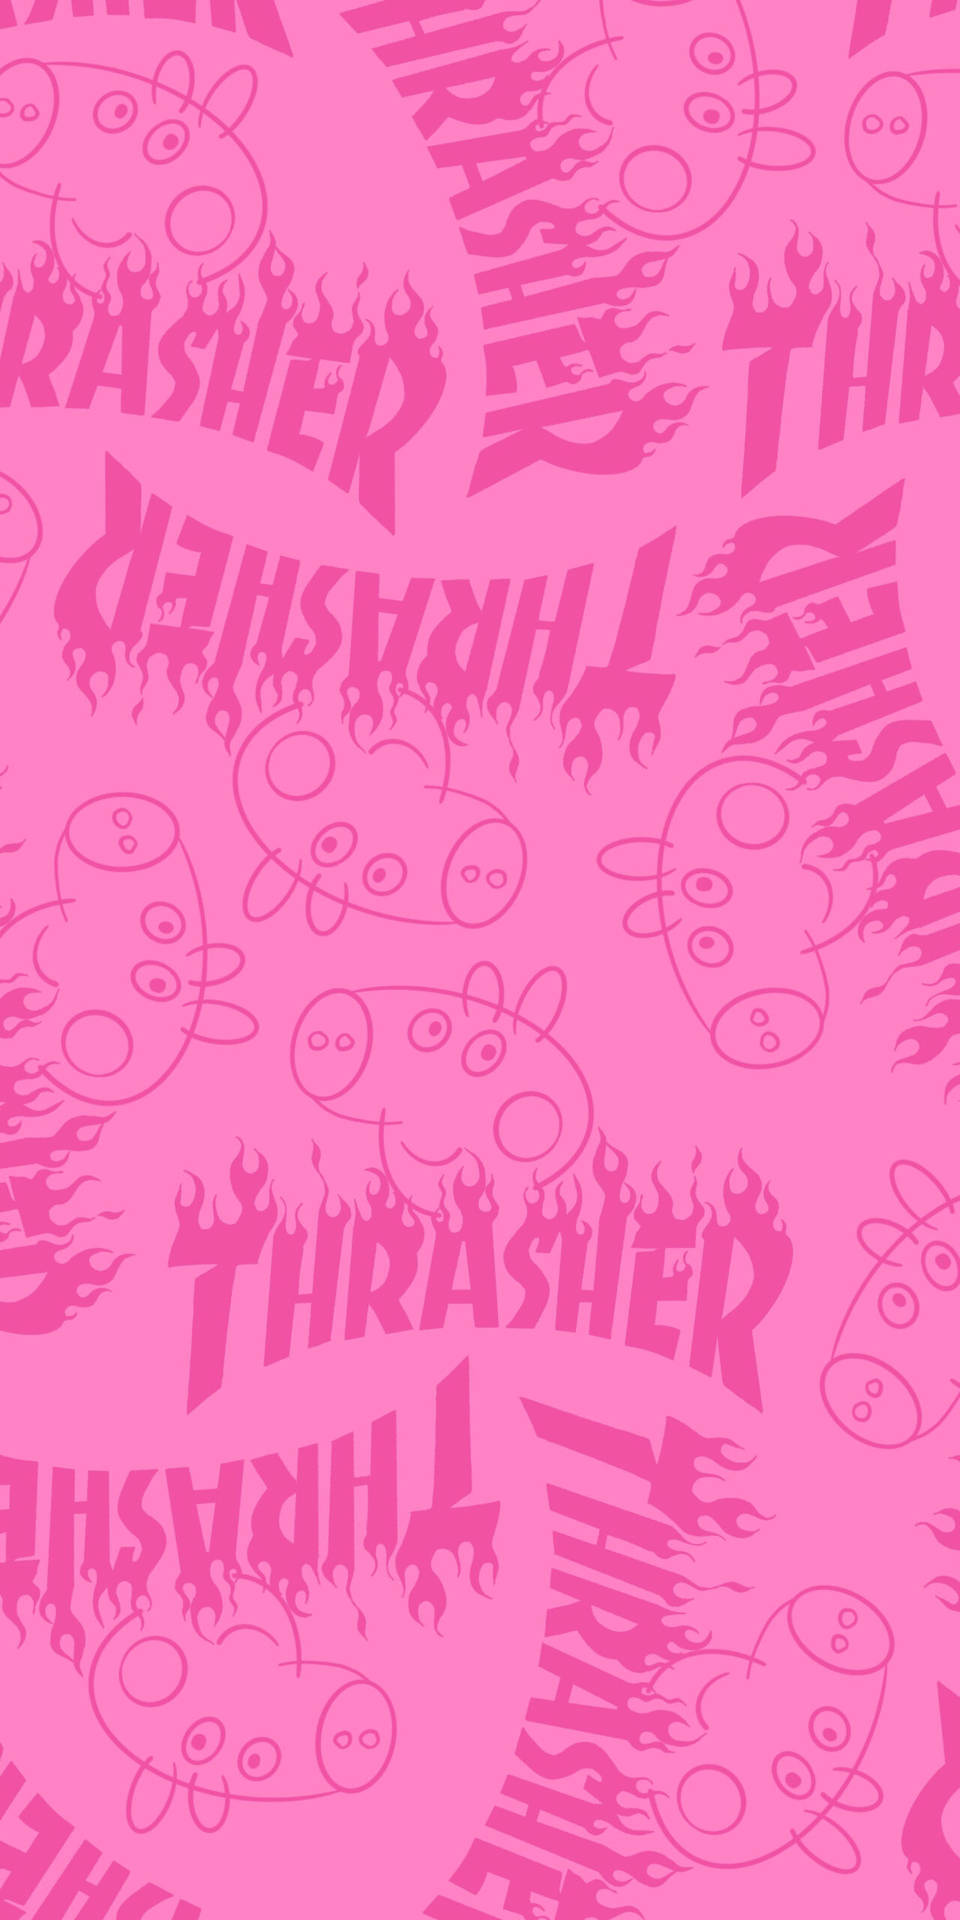 Look at Thrasher  Thrasher Beast wallpaper Hypebeast wallpaper